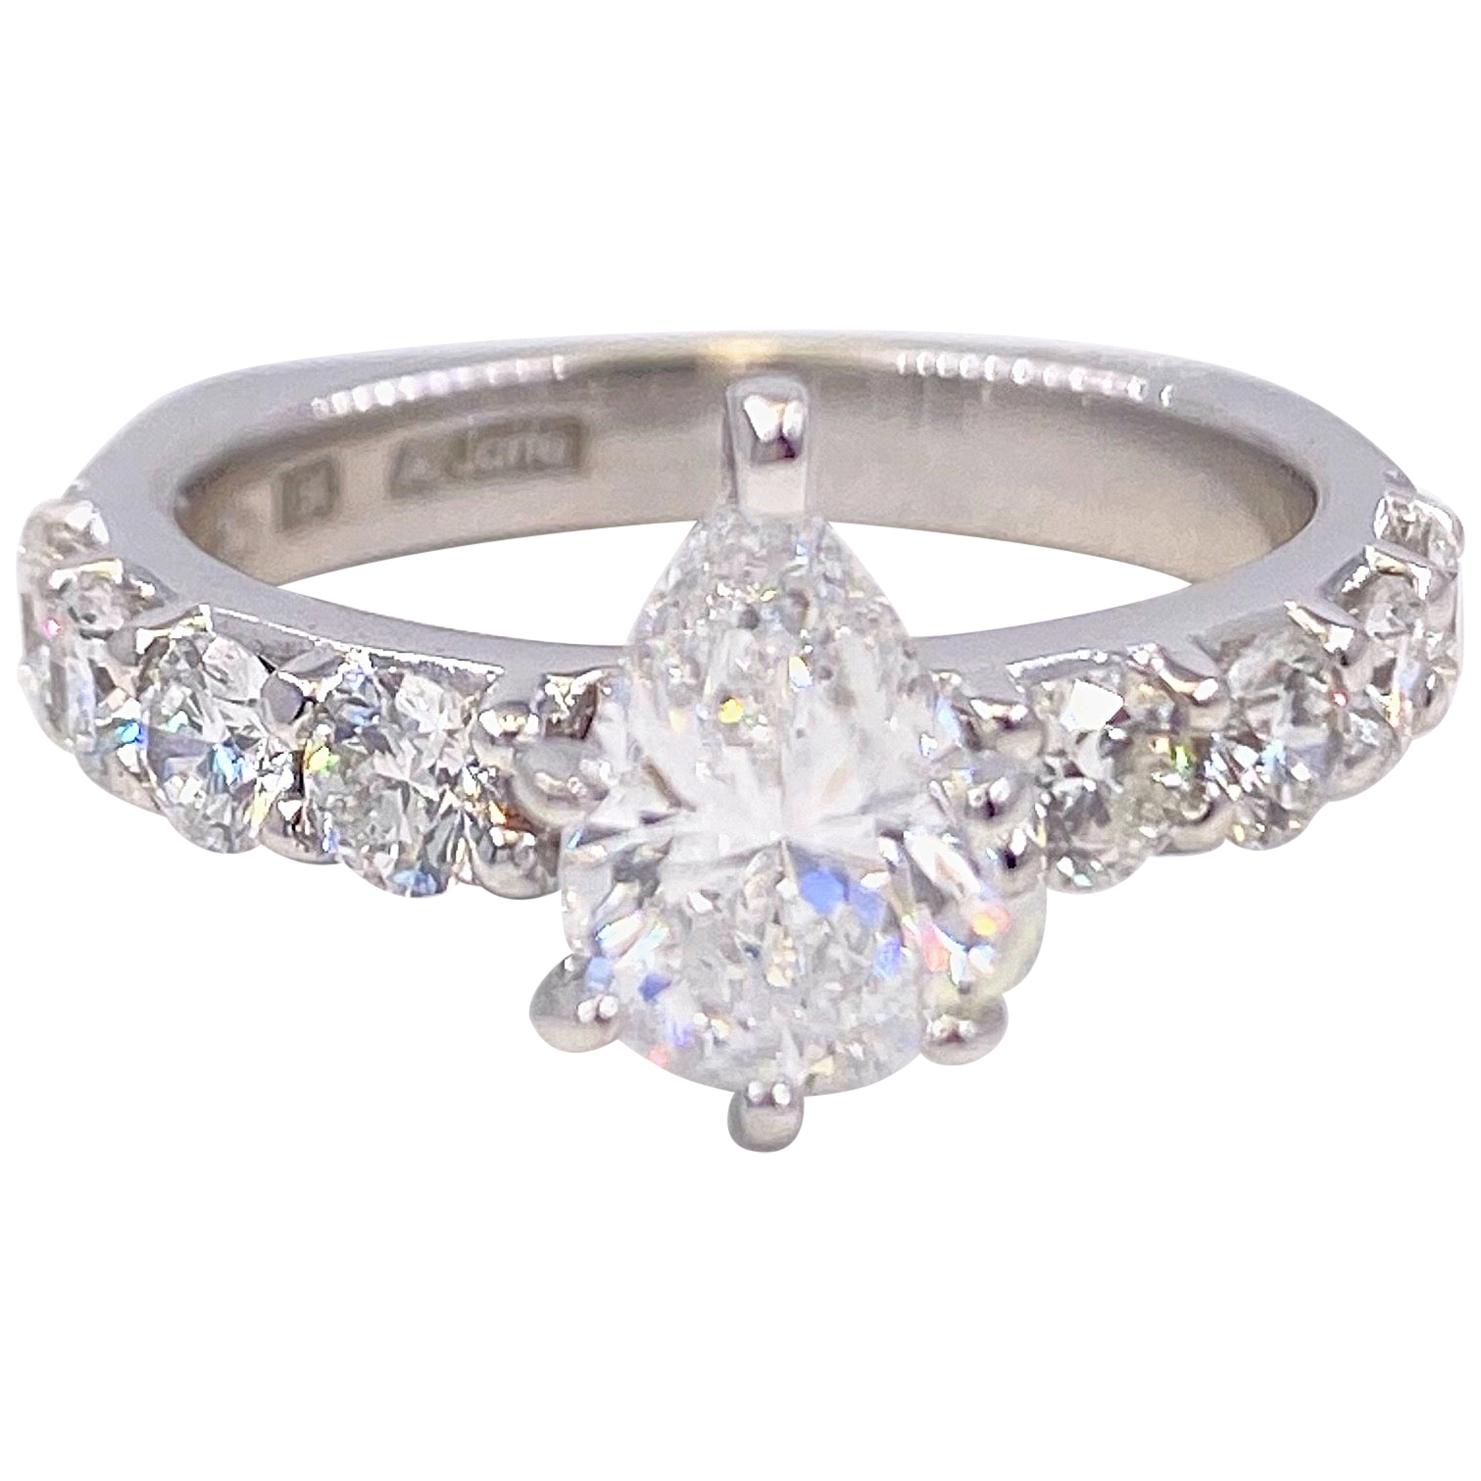 A.JAFFE Pear Shape 1.61 Carat Diamond Engagement Ring 18 Karat White Gold IGI